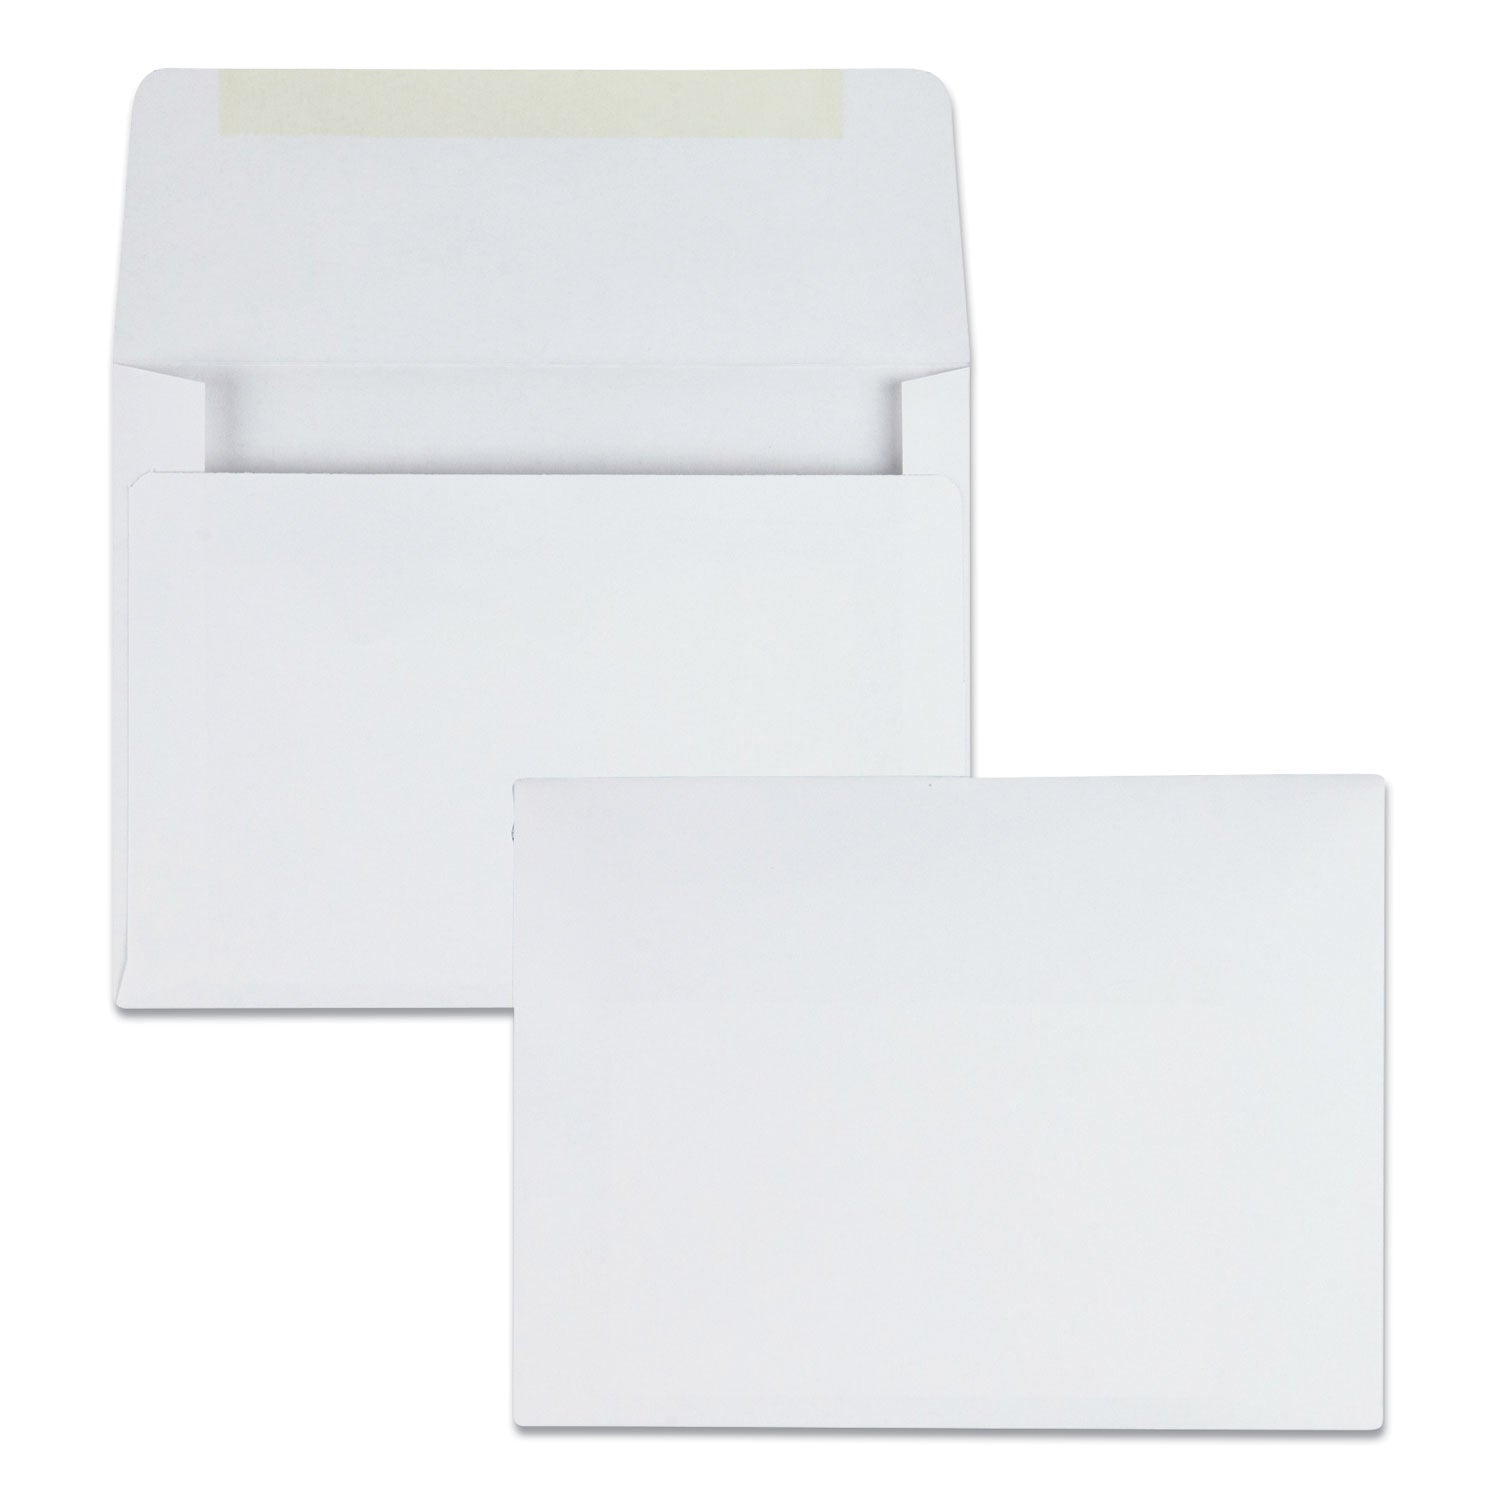 Greeting Card/Invitation Envelope, A-2, Square Flap, Gummed Closure, 4.38 x 5.75, White, 500/Box - 